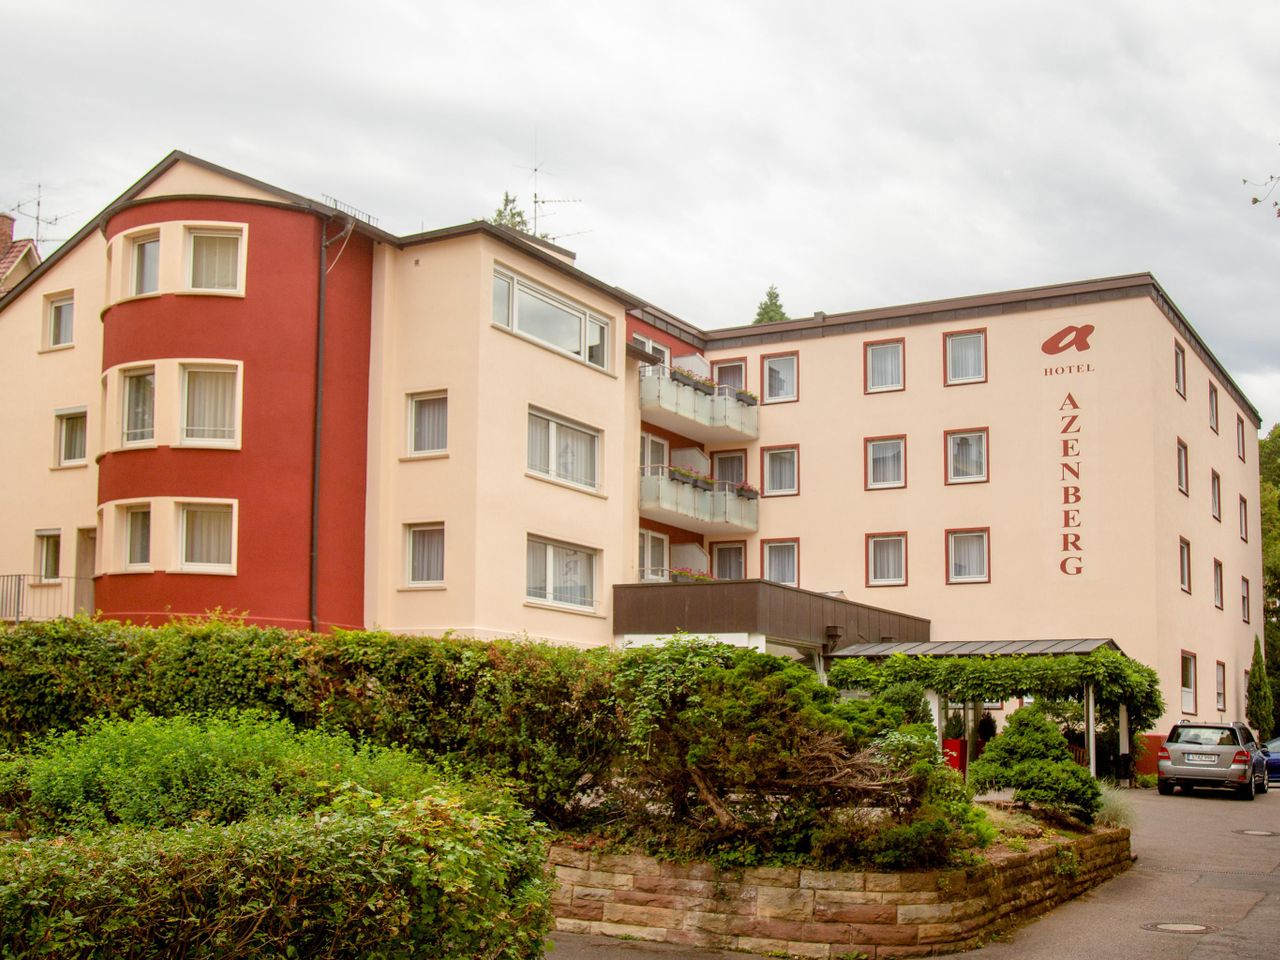 6 Tage im Hotel Azenberg Stuttgart 